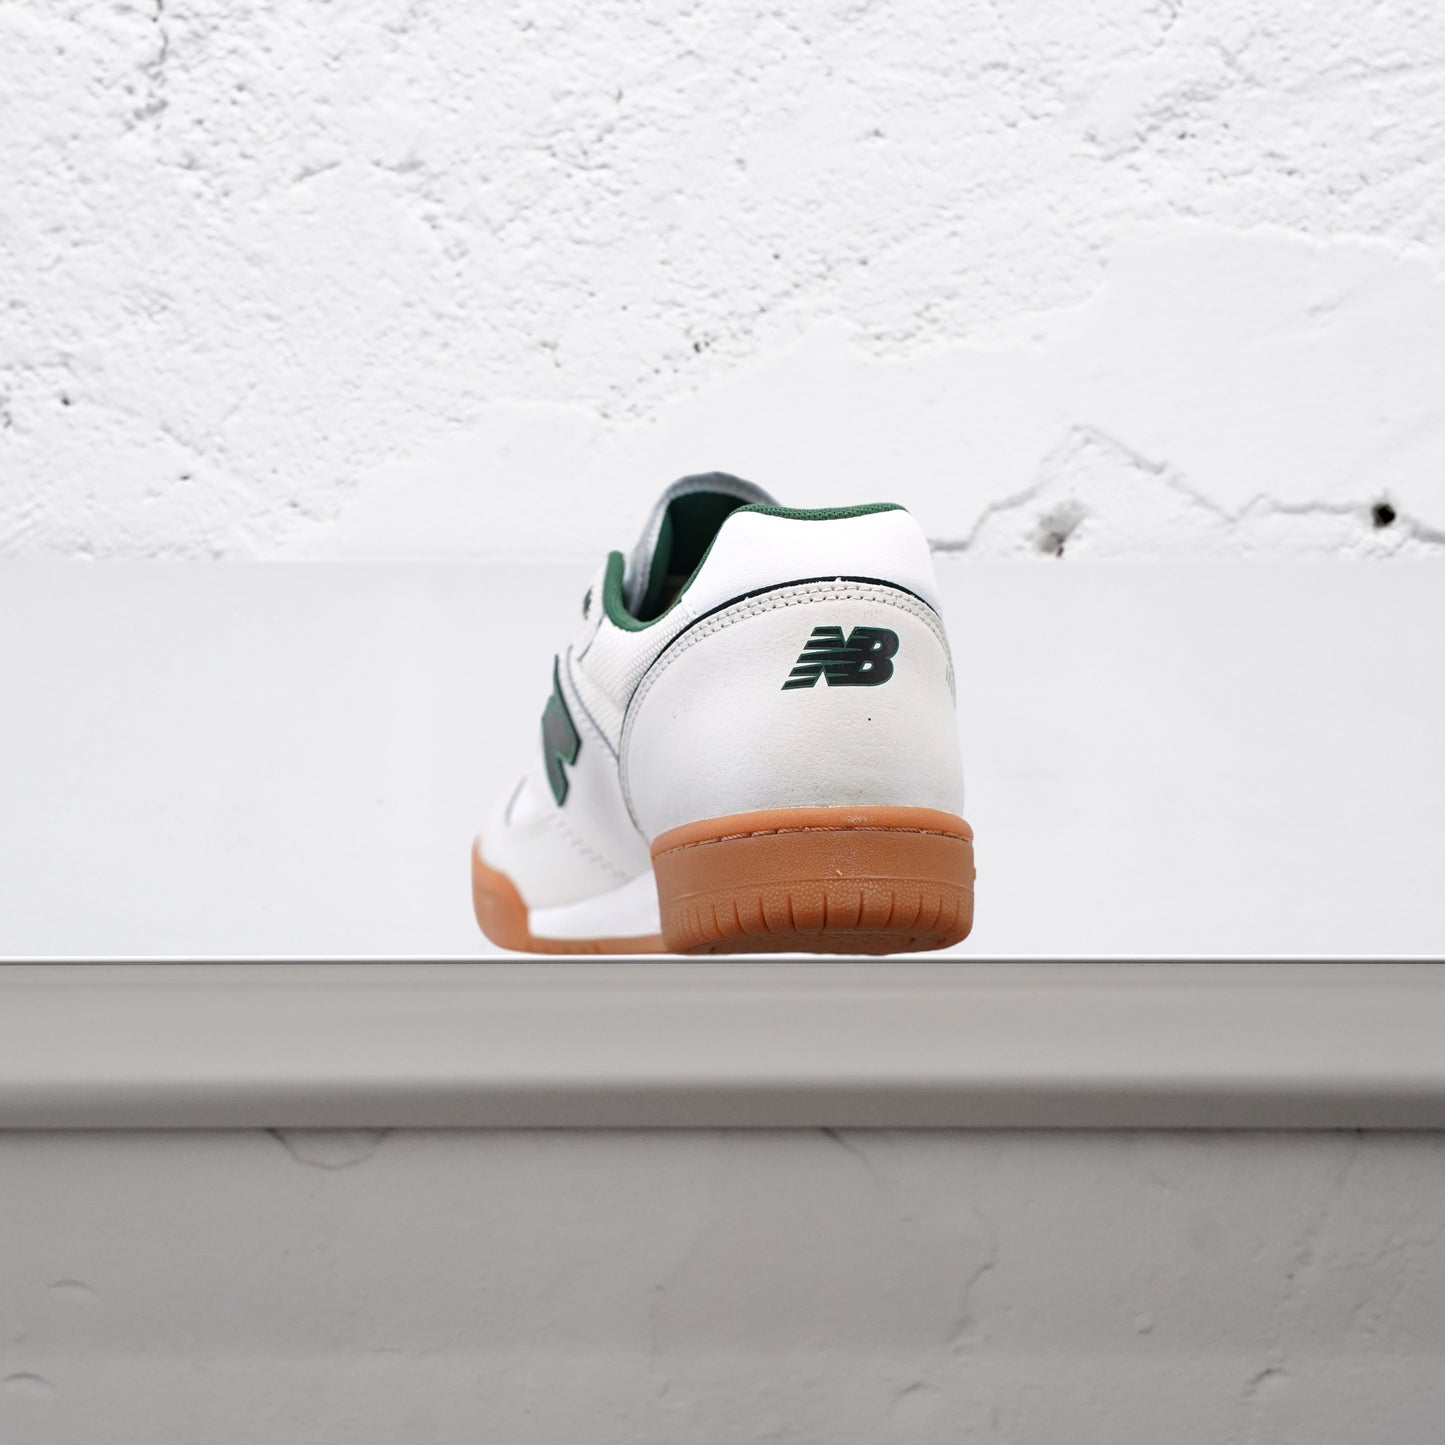 New Balance Numeric - Tom Knox 600 Shoes - White/Green